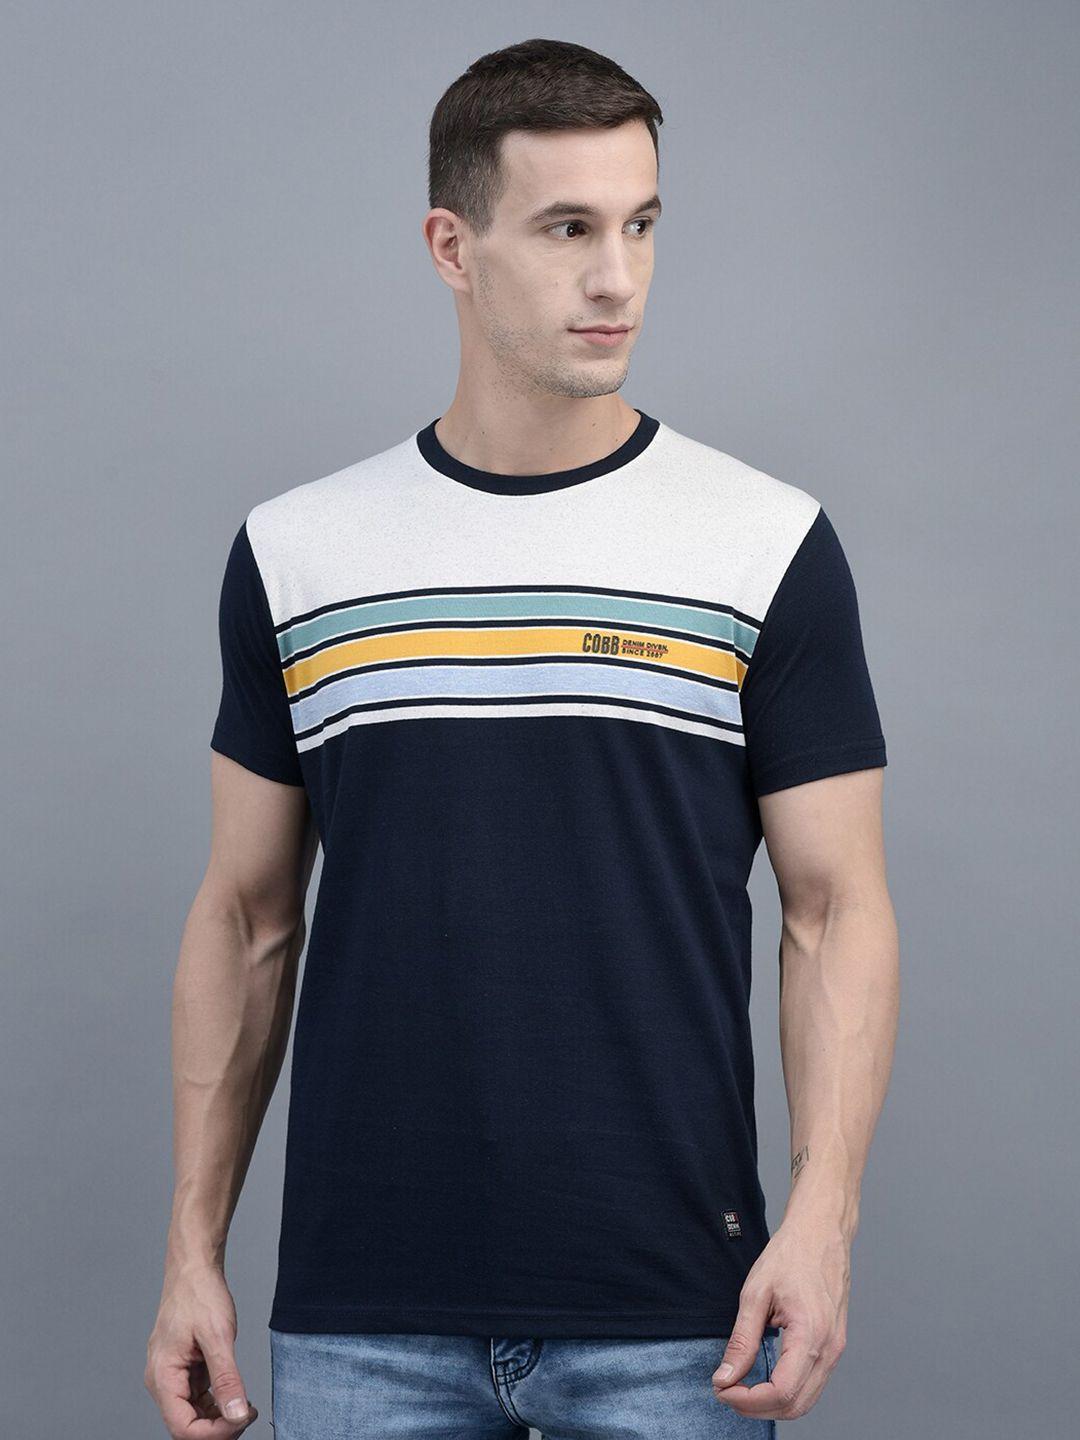 cobb striped round neck cotton casual t-shirt